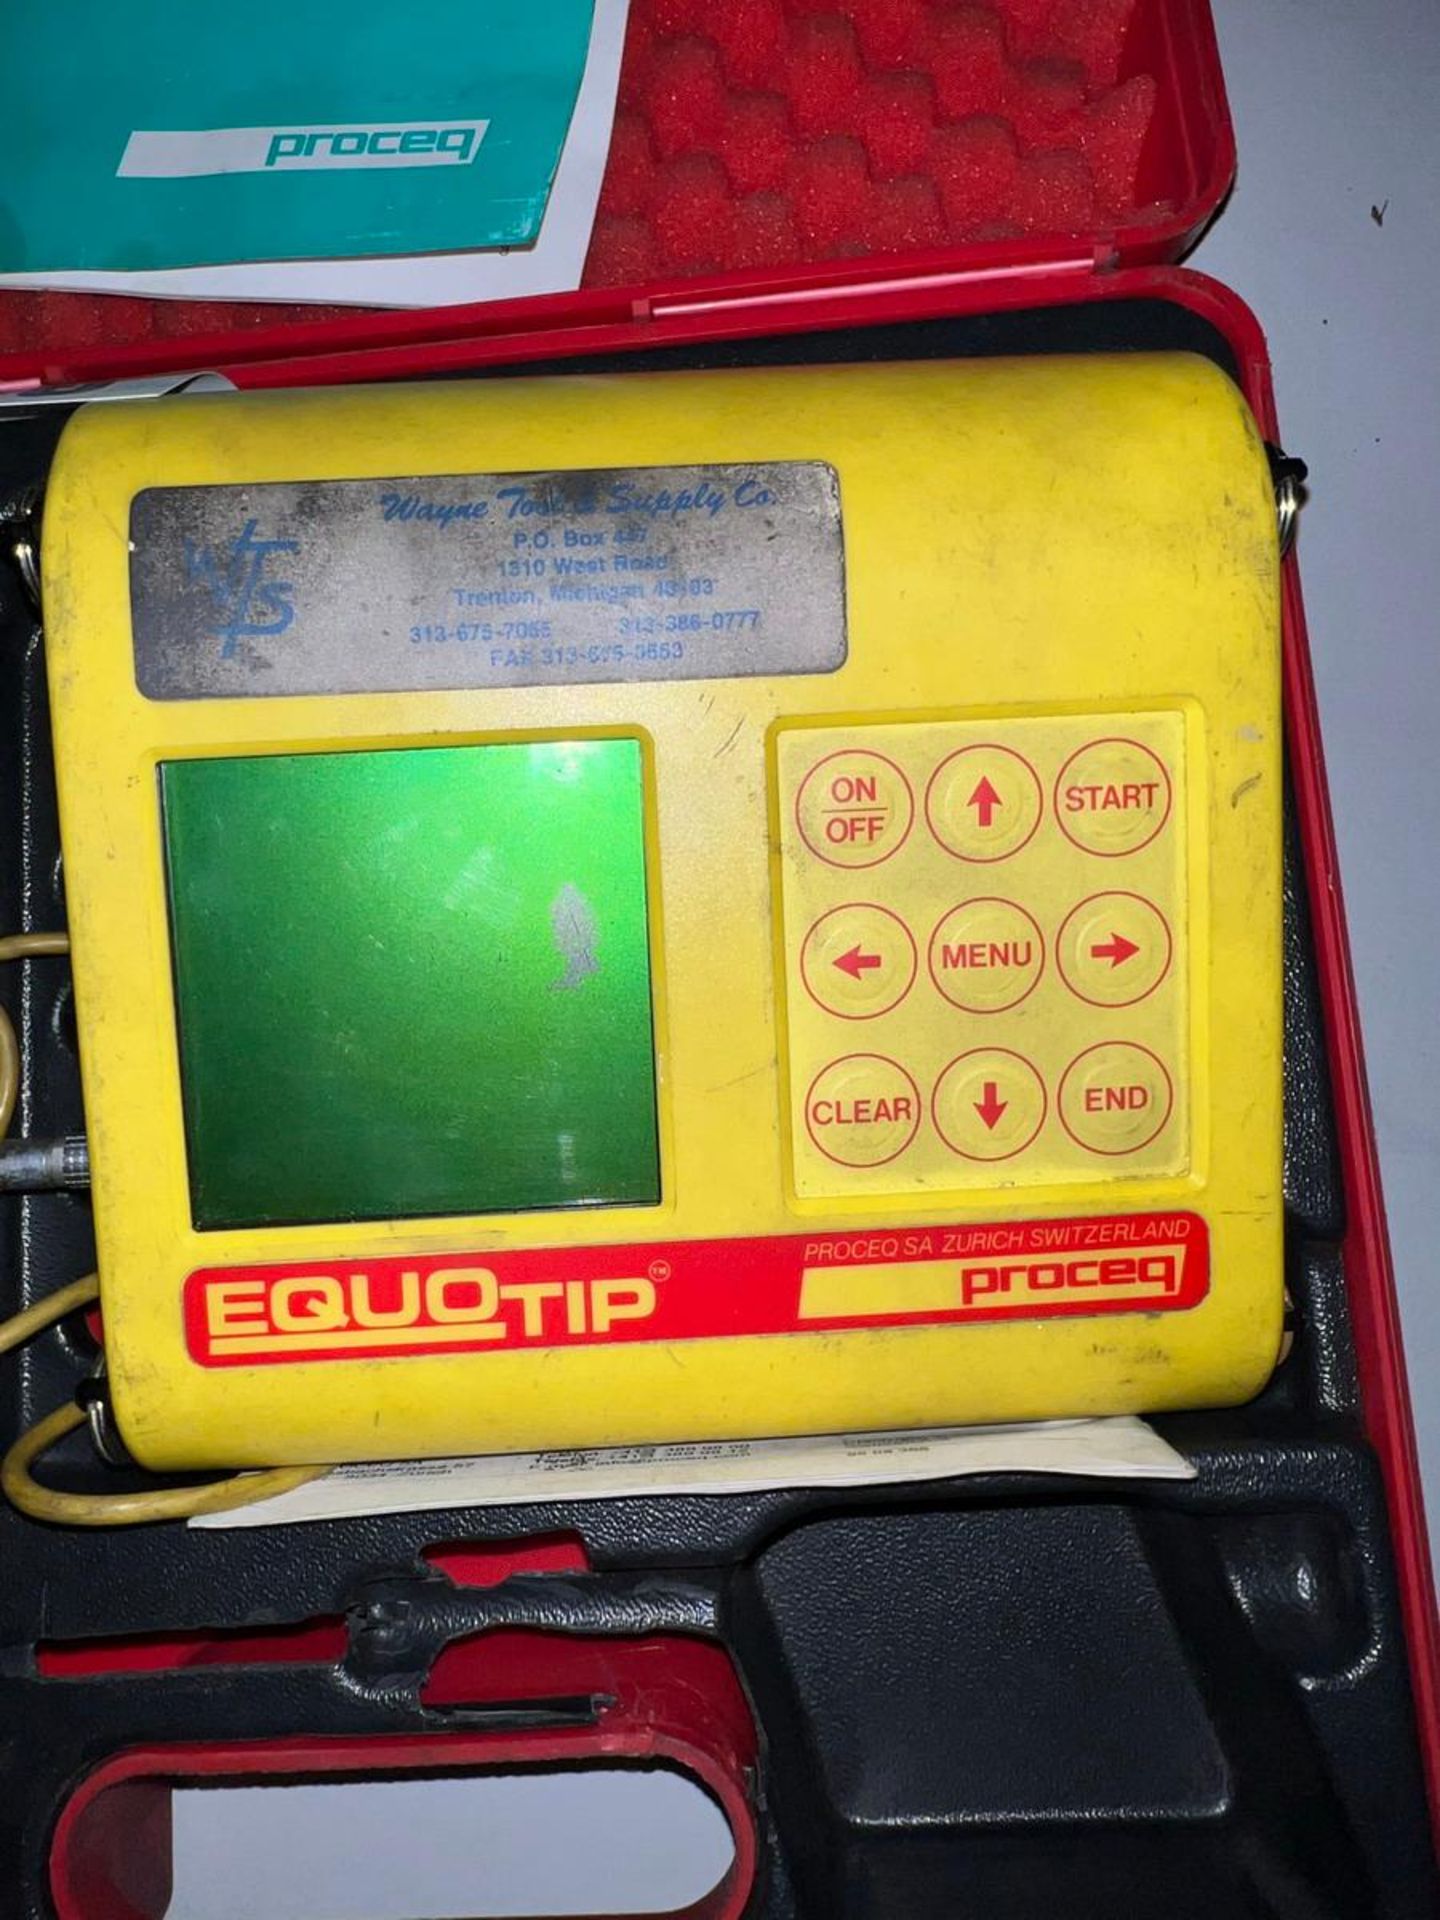 Proceq Equotip Portable Electronic Hardness Tester - Image 2 of 3